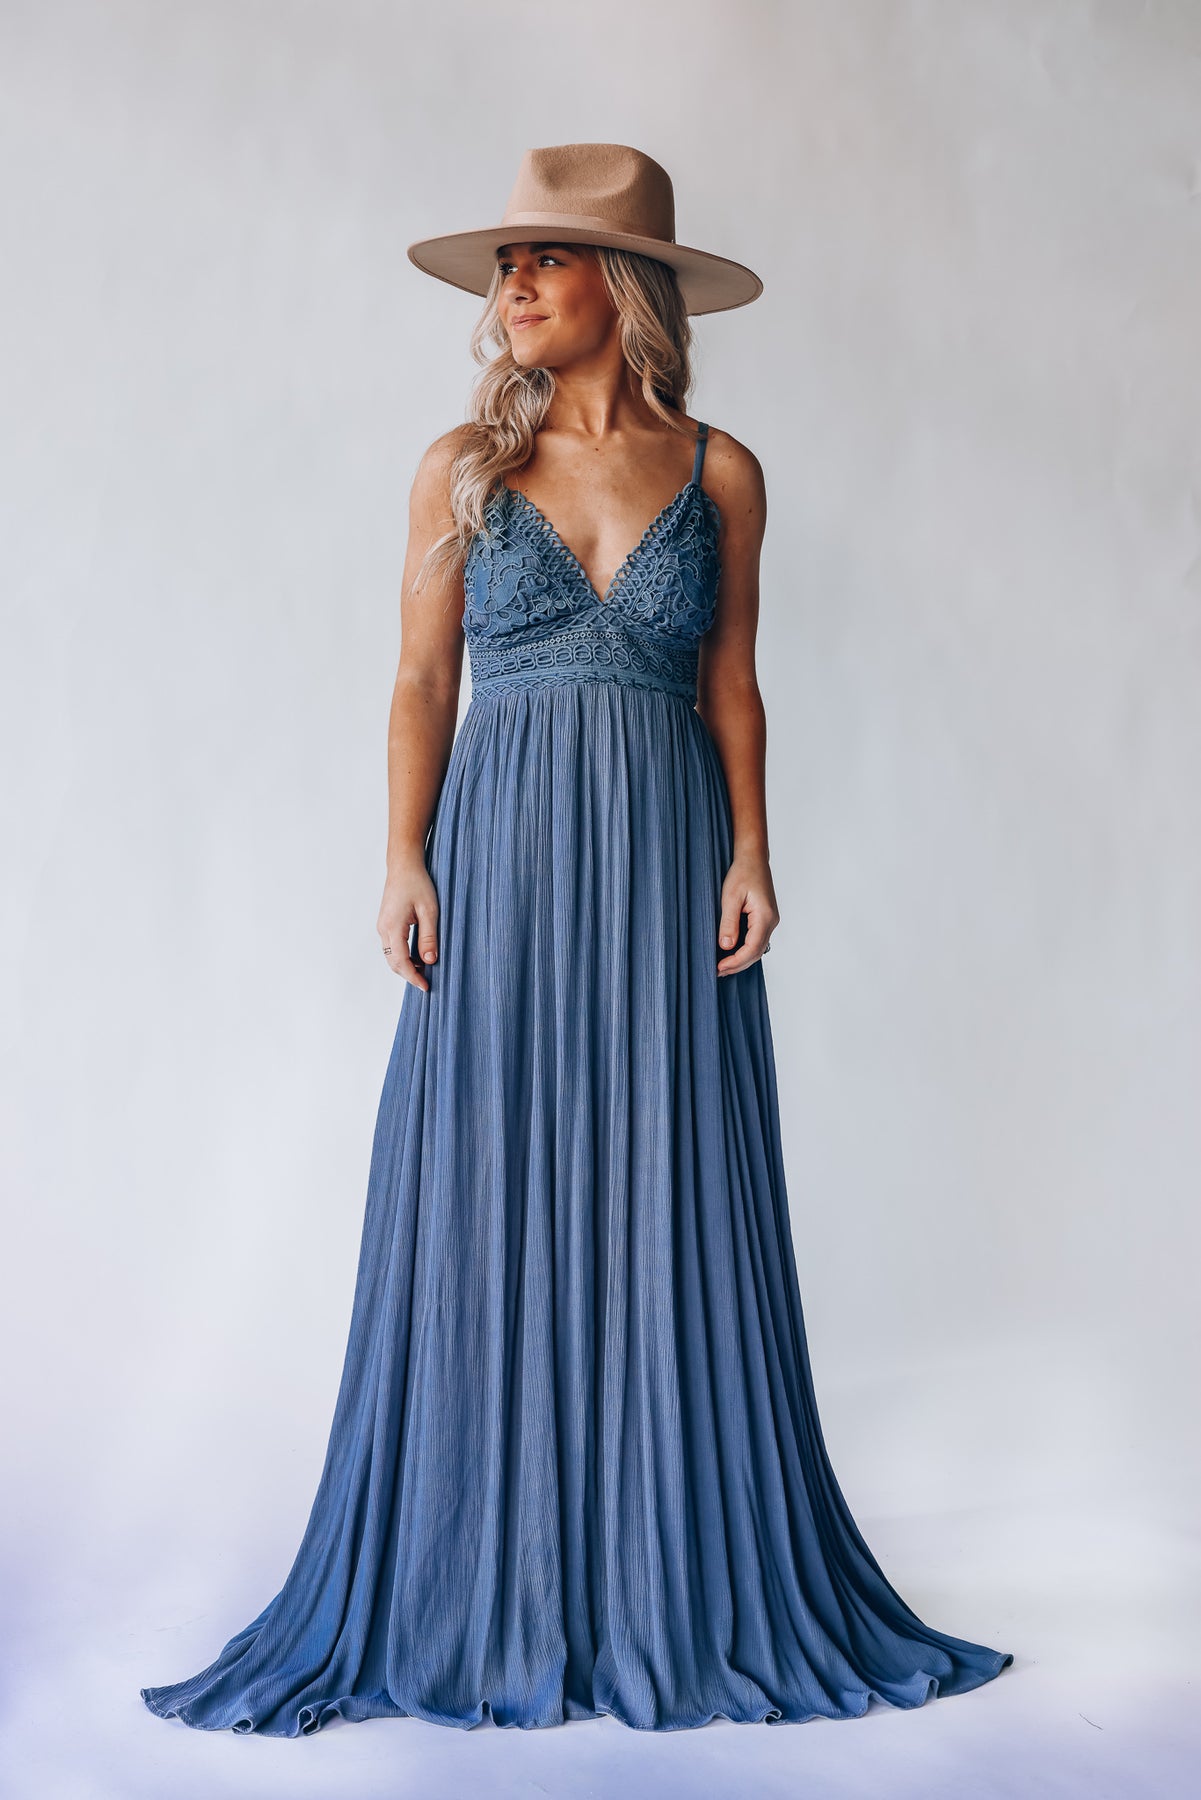 Wanderlust Maxi Dress (Denim – Southern Blue) Alternative